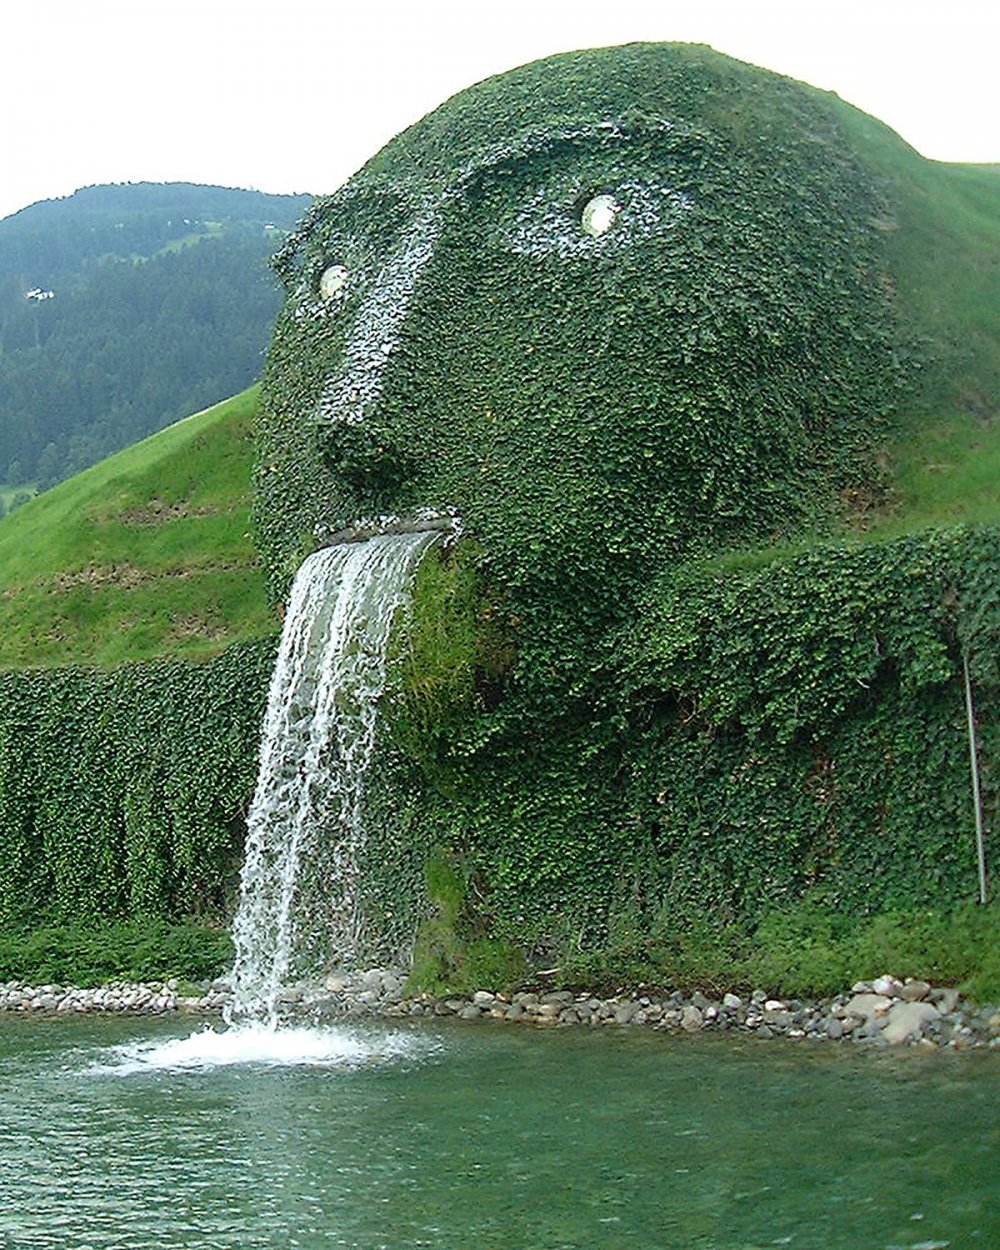 Swarovski fountain - a giant with crystal eyes